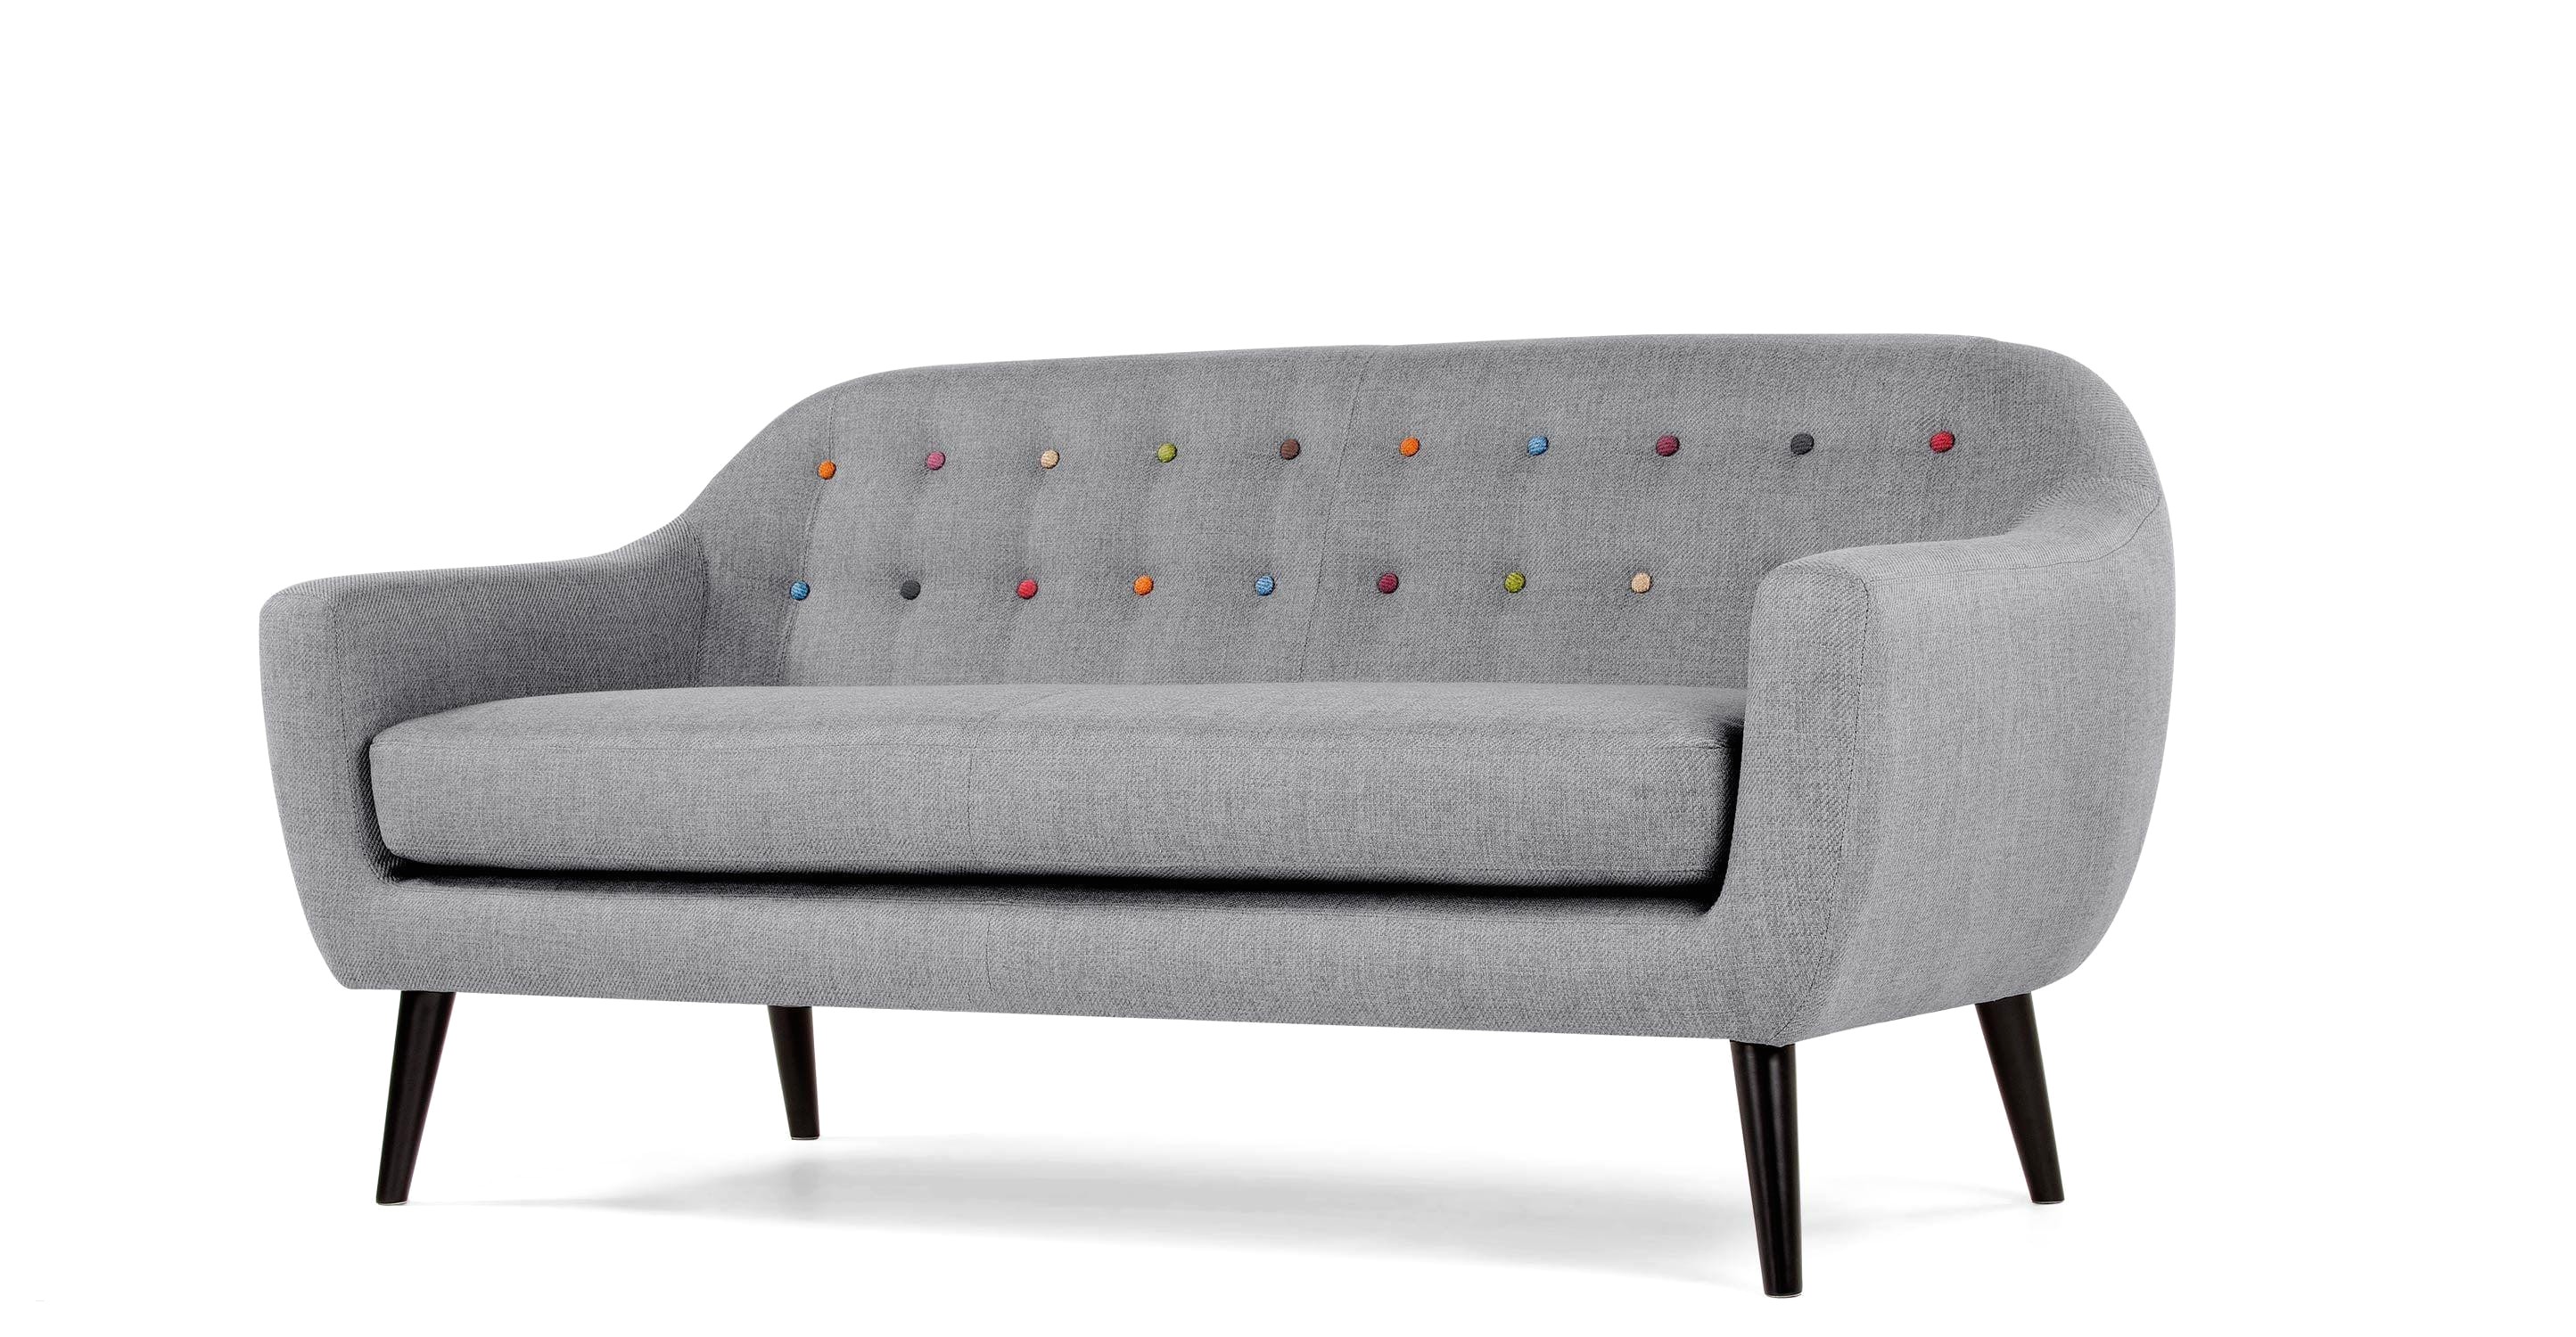 Sleeper sofas at Macy S 50 Best Of Macys Sleeper sofa Pictures 50 Photos Home Improvement